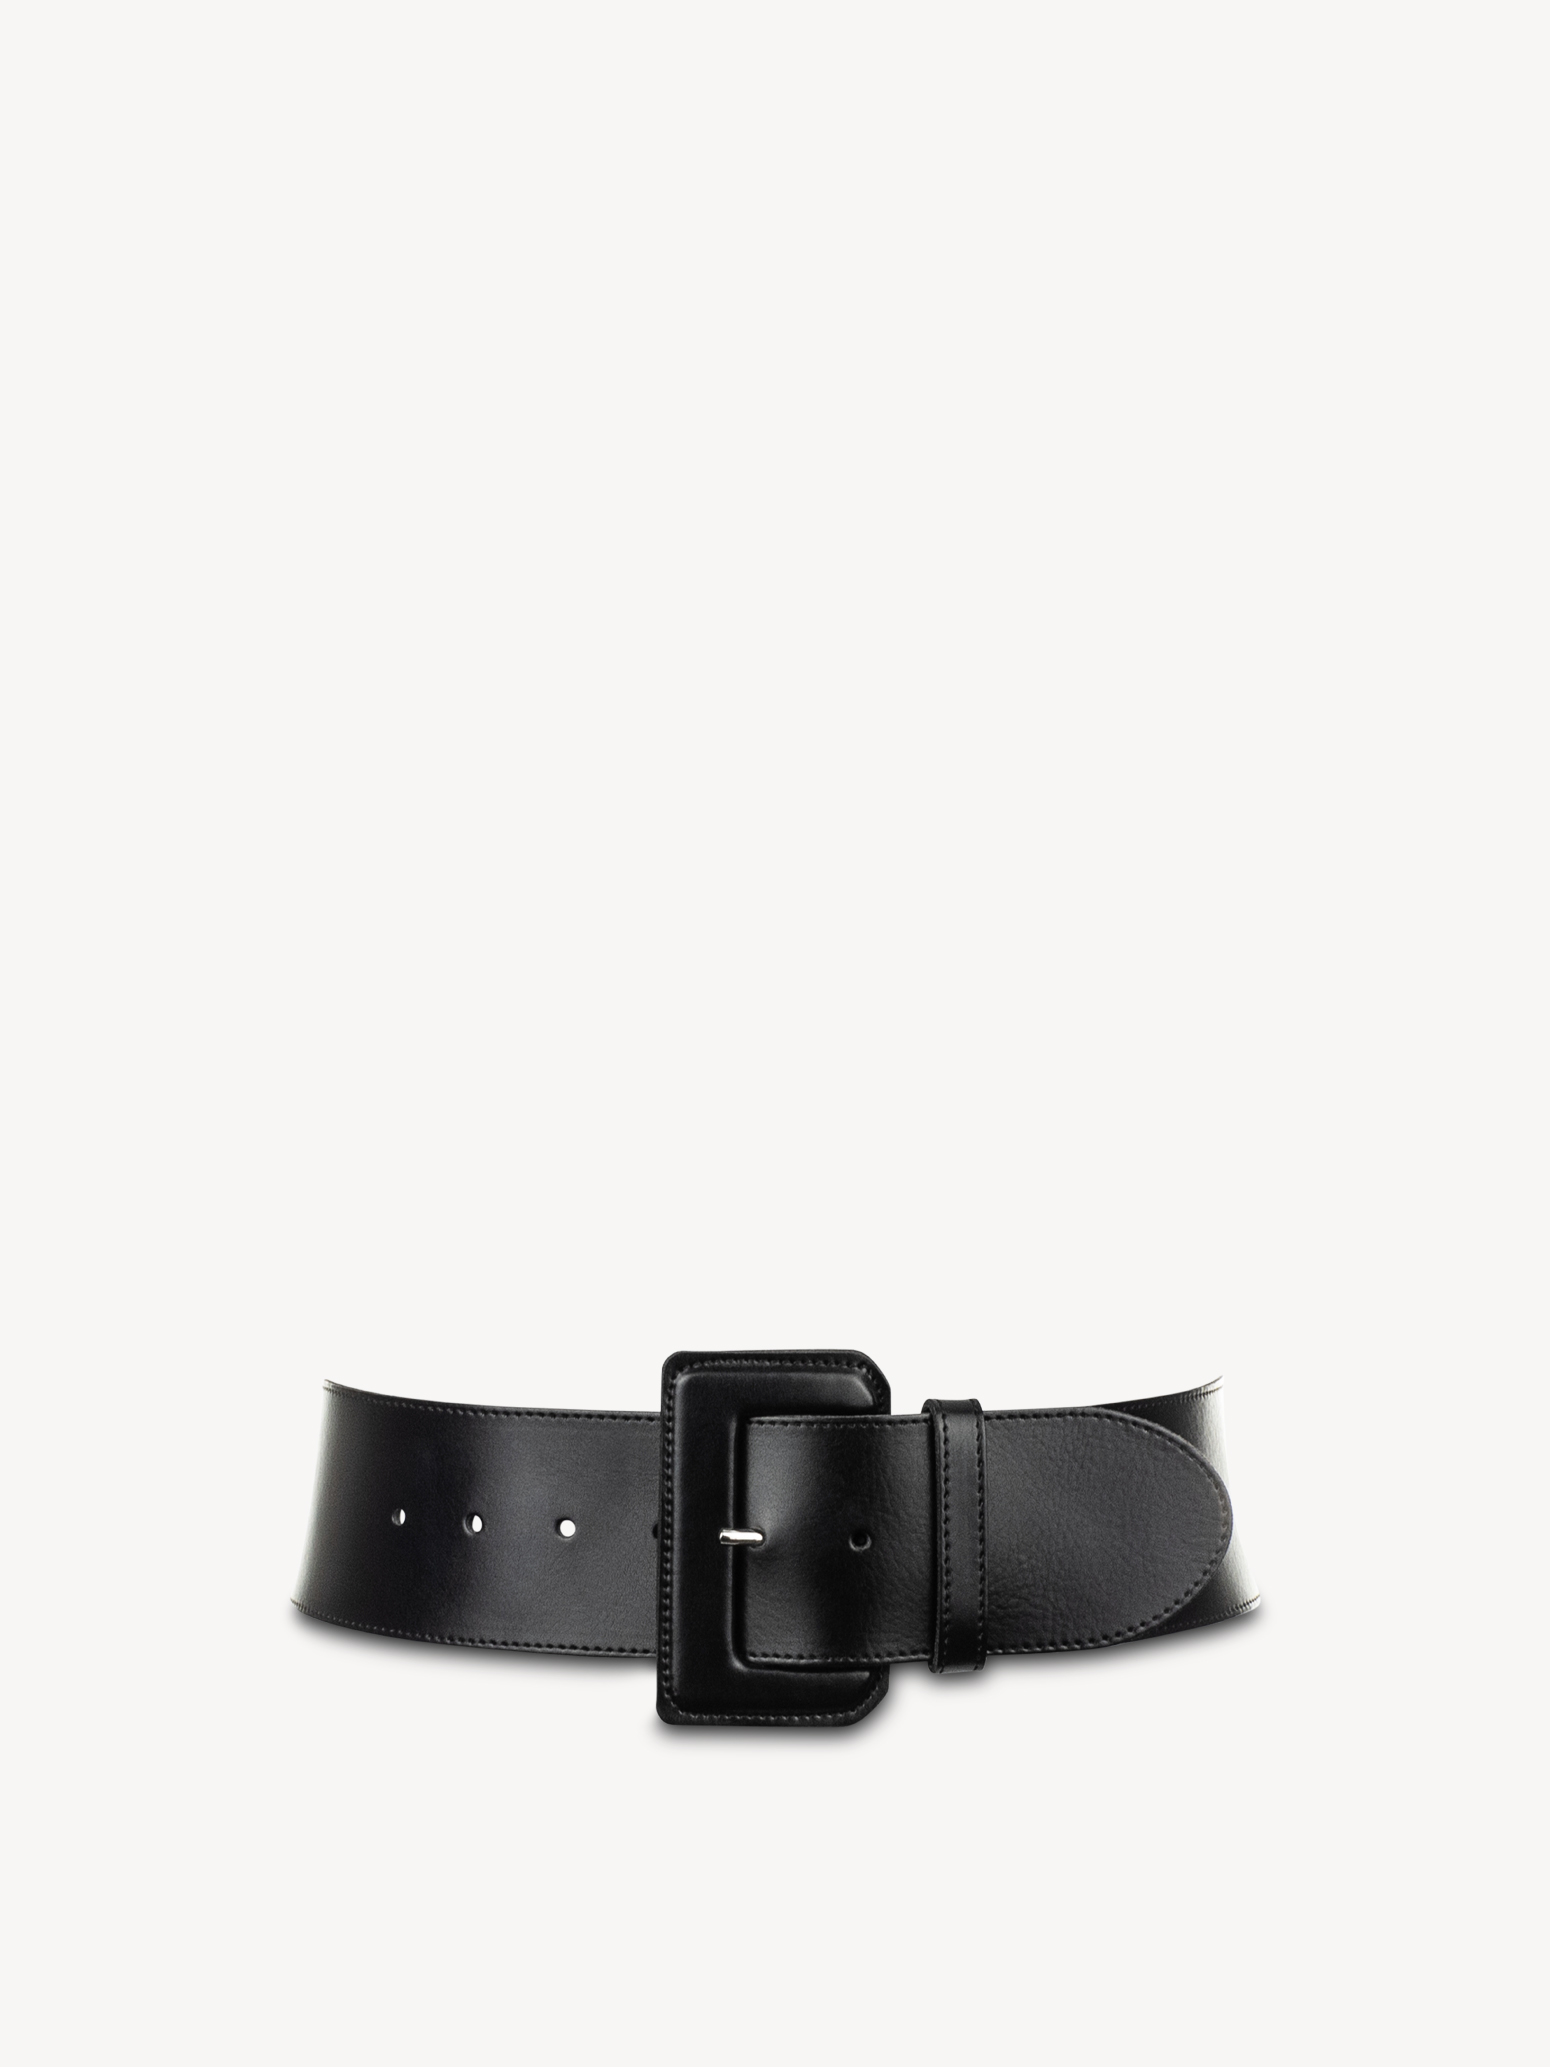 Leather Waist belt - black